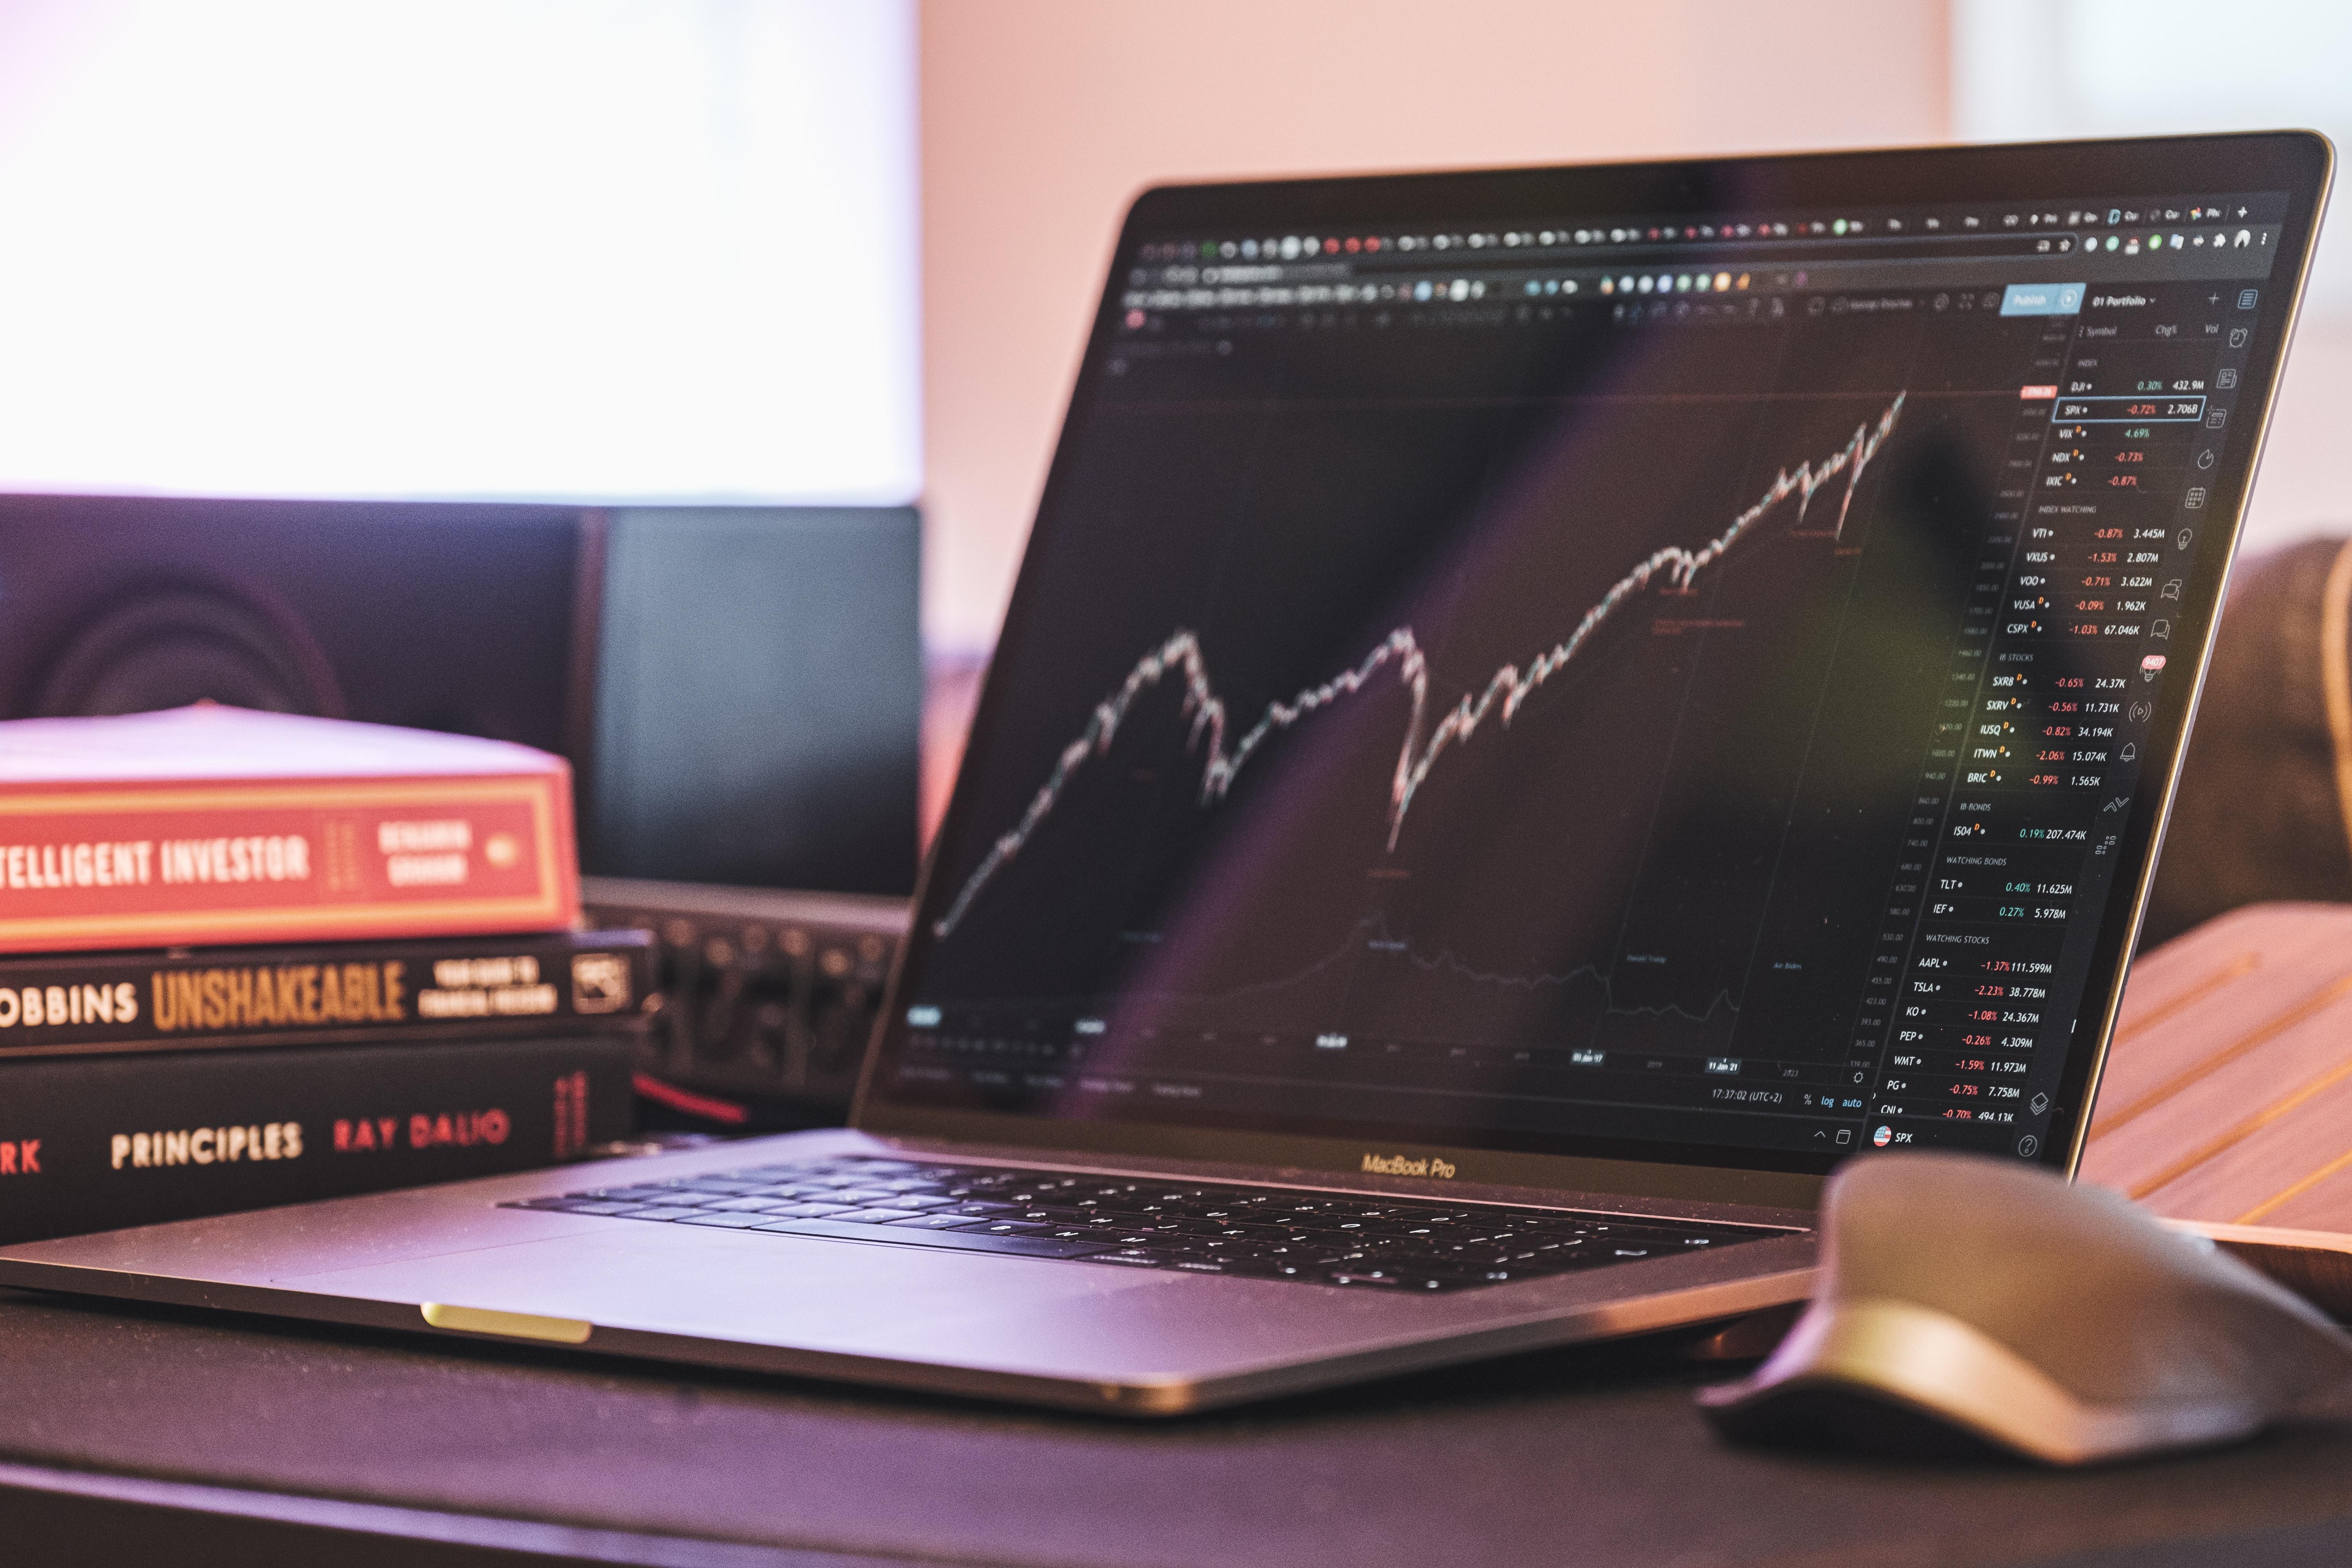 ETF stock market chart on laptop